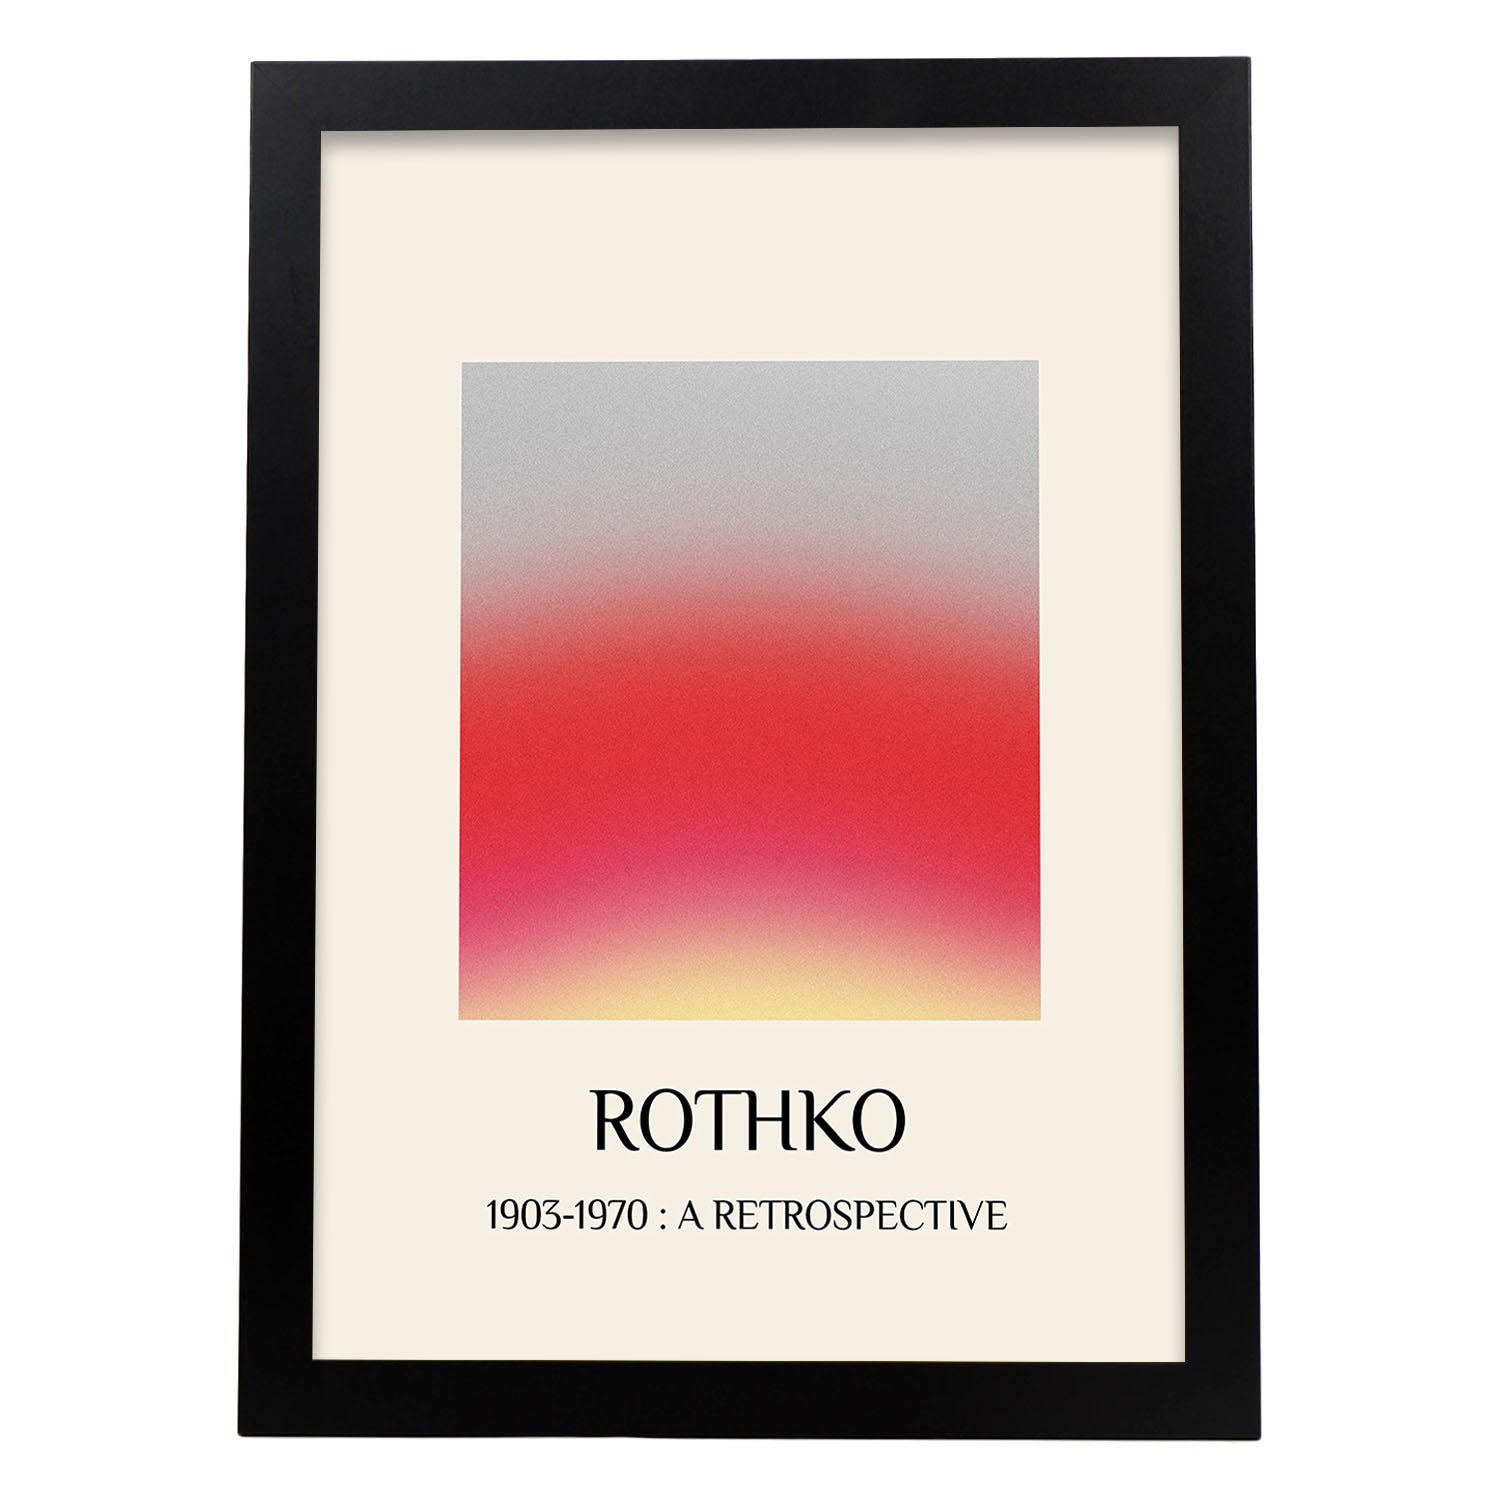 Lamina artistica decorativa con ilustración de Exposición Rothko 5 estilo expresionismo abstracto-Artwork-Nacnic-A4-Marco Negro-Nacnic Estudio SL